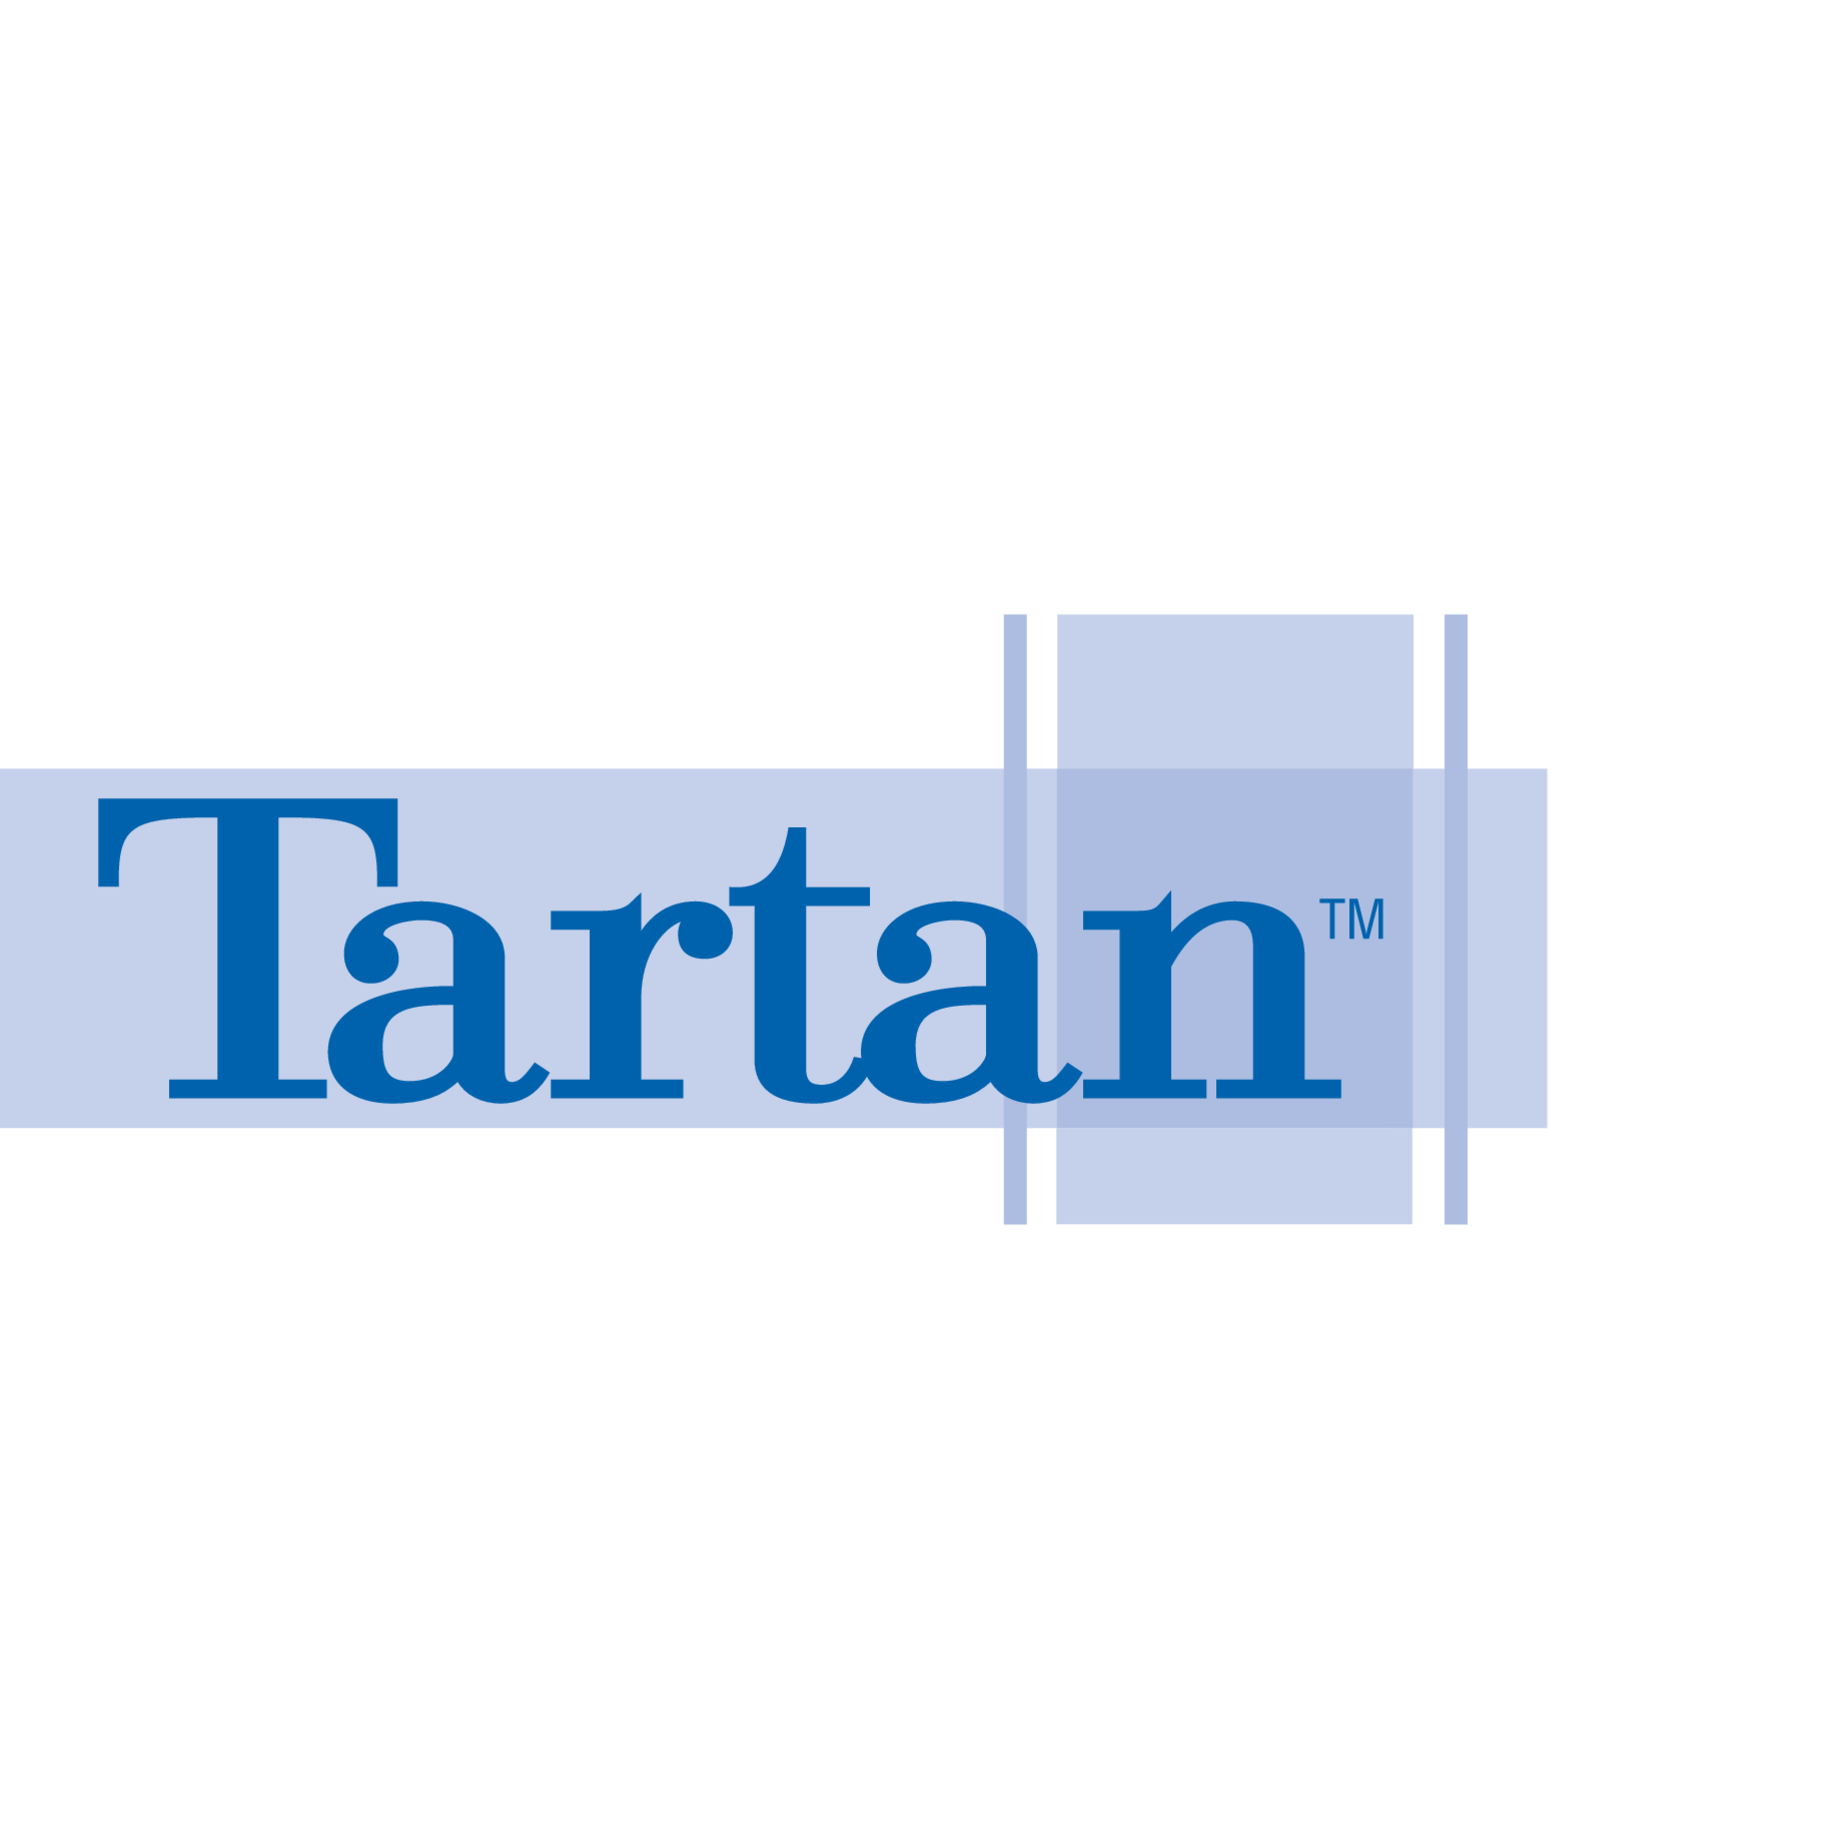 Tartan™